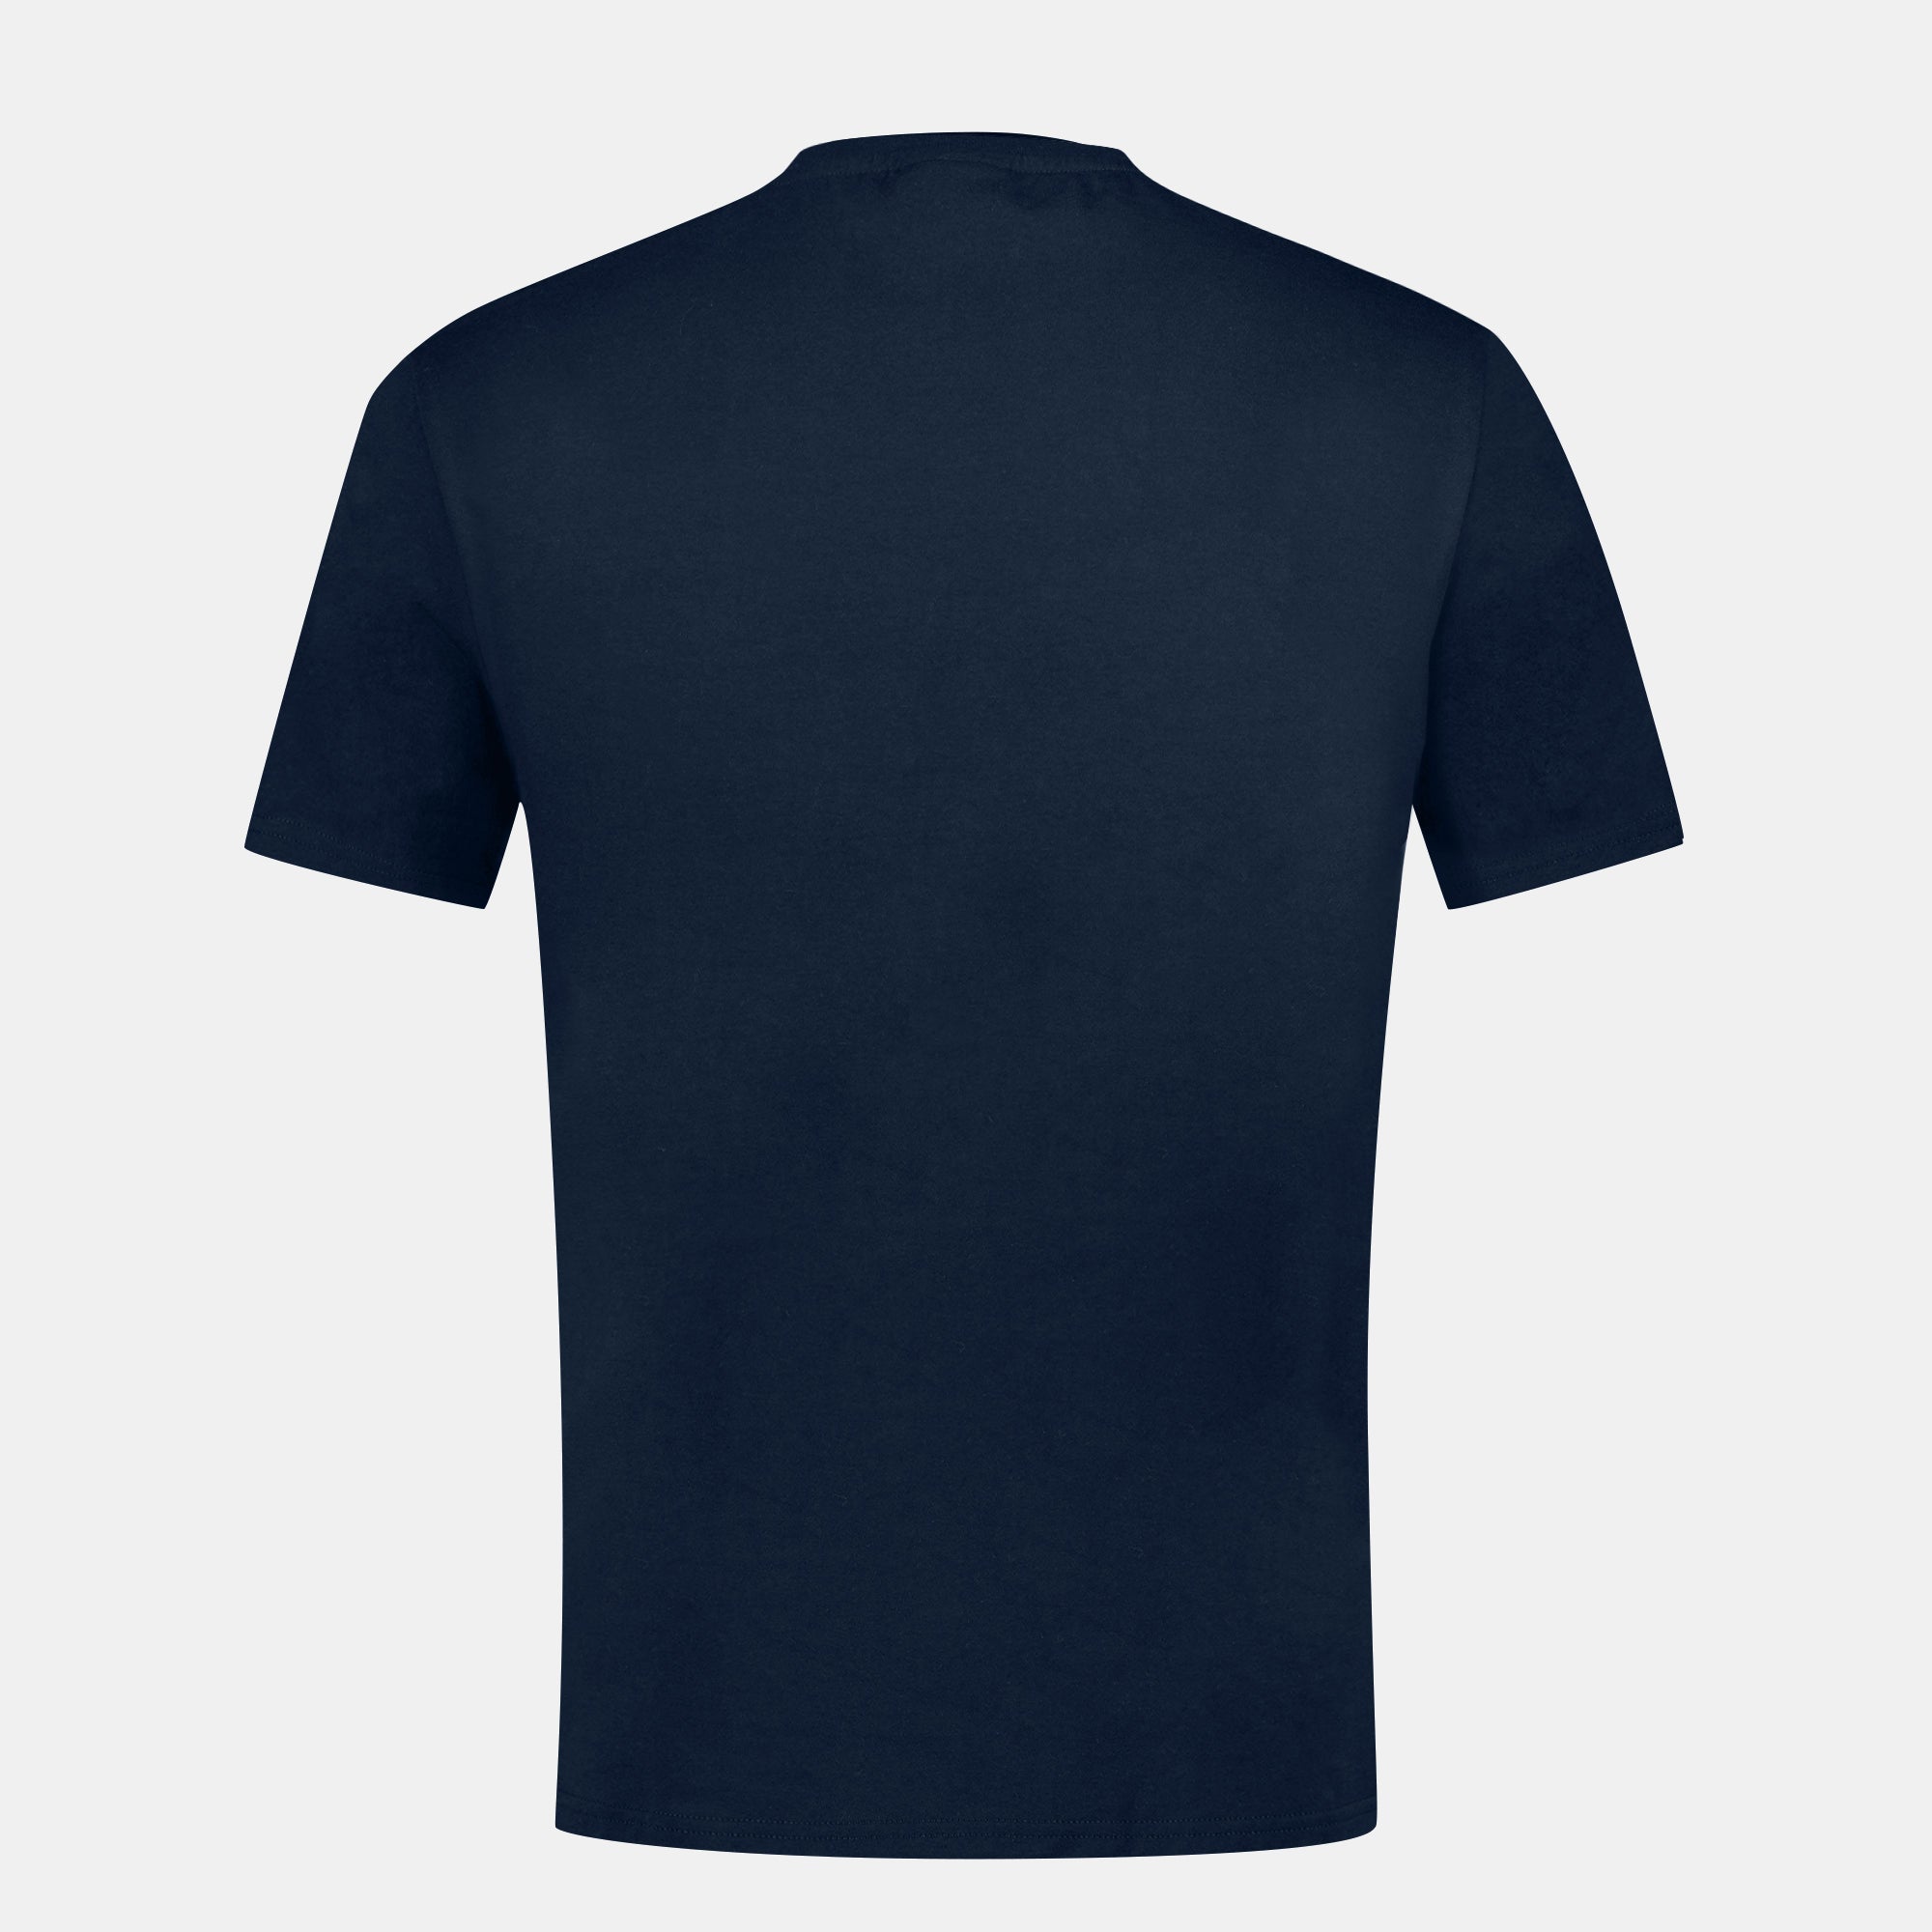 2411174-LA PAIX Tee SS N°1 M sky captain  | T-Shirt motif «La Paix» für Herren